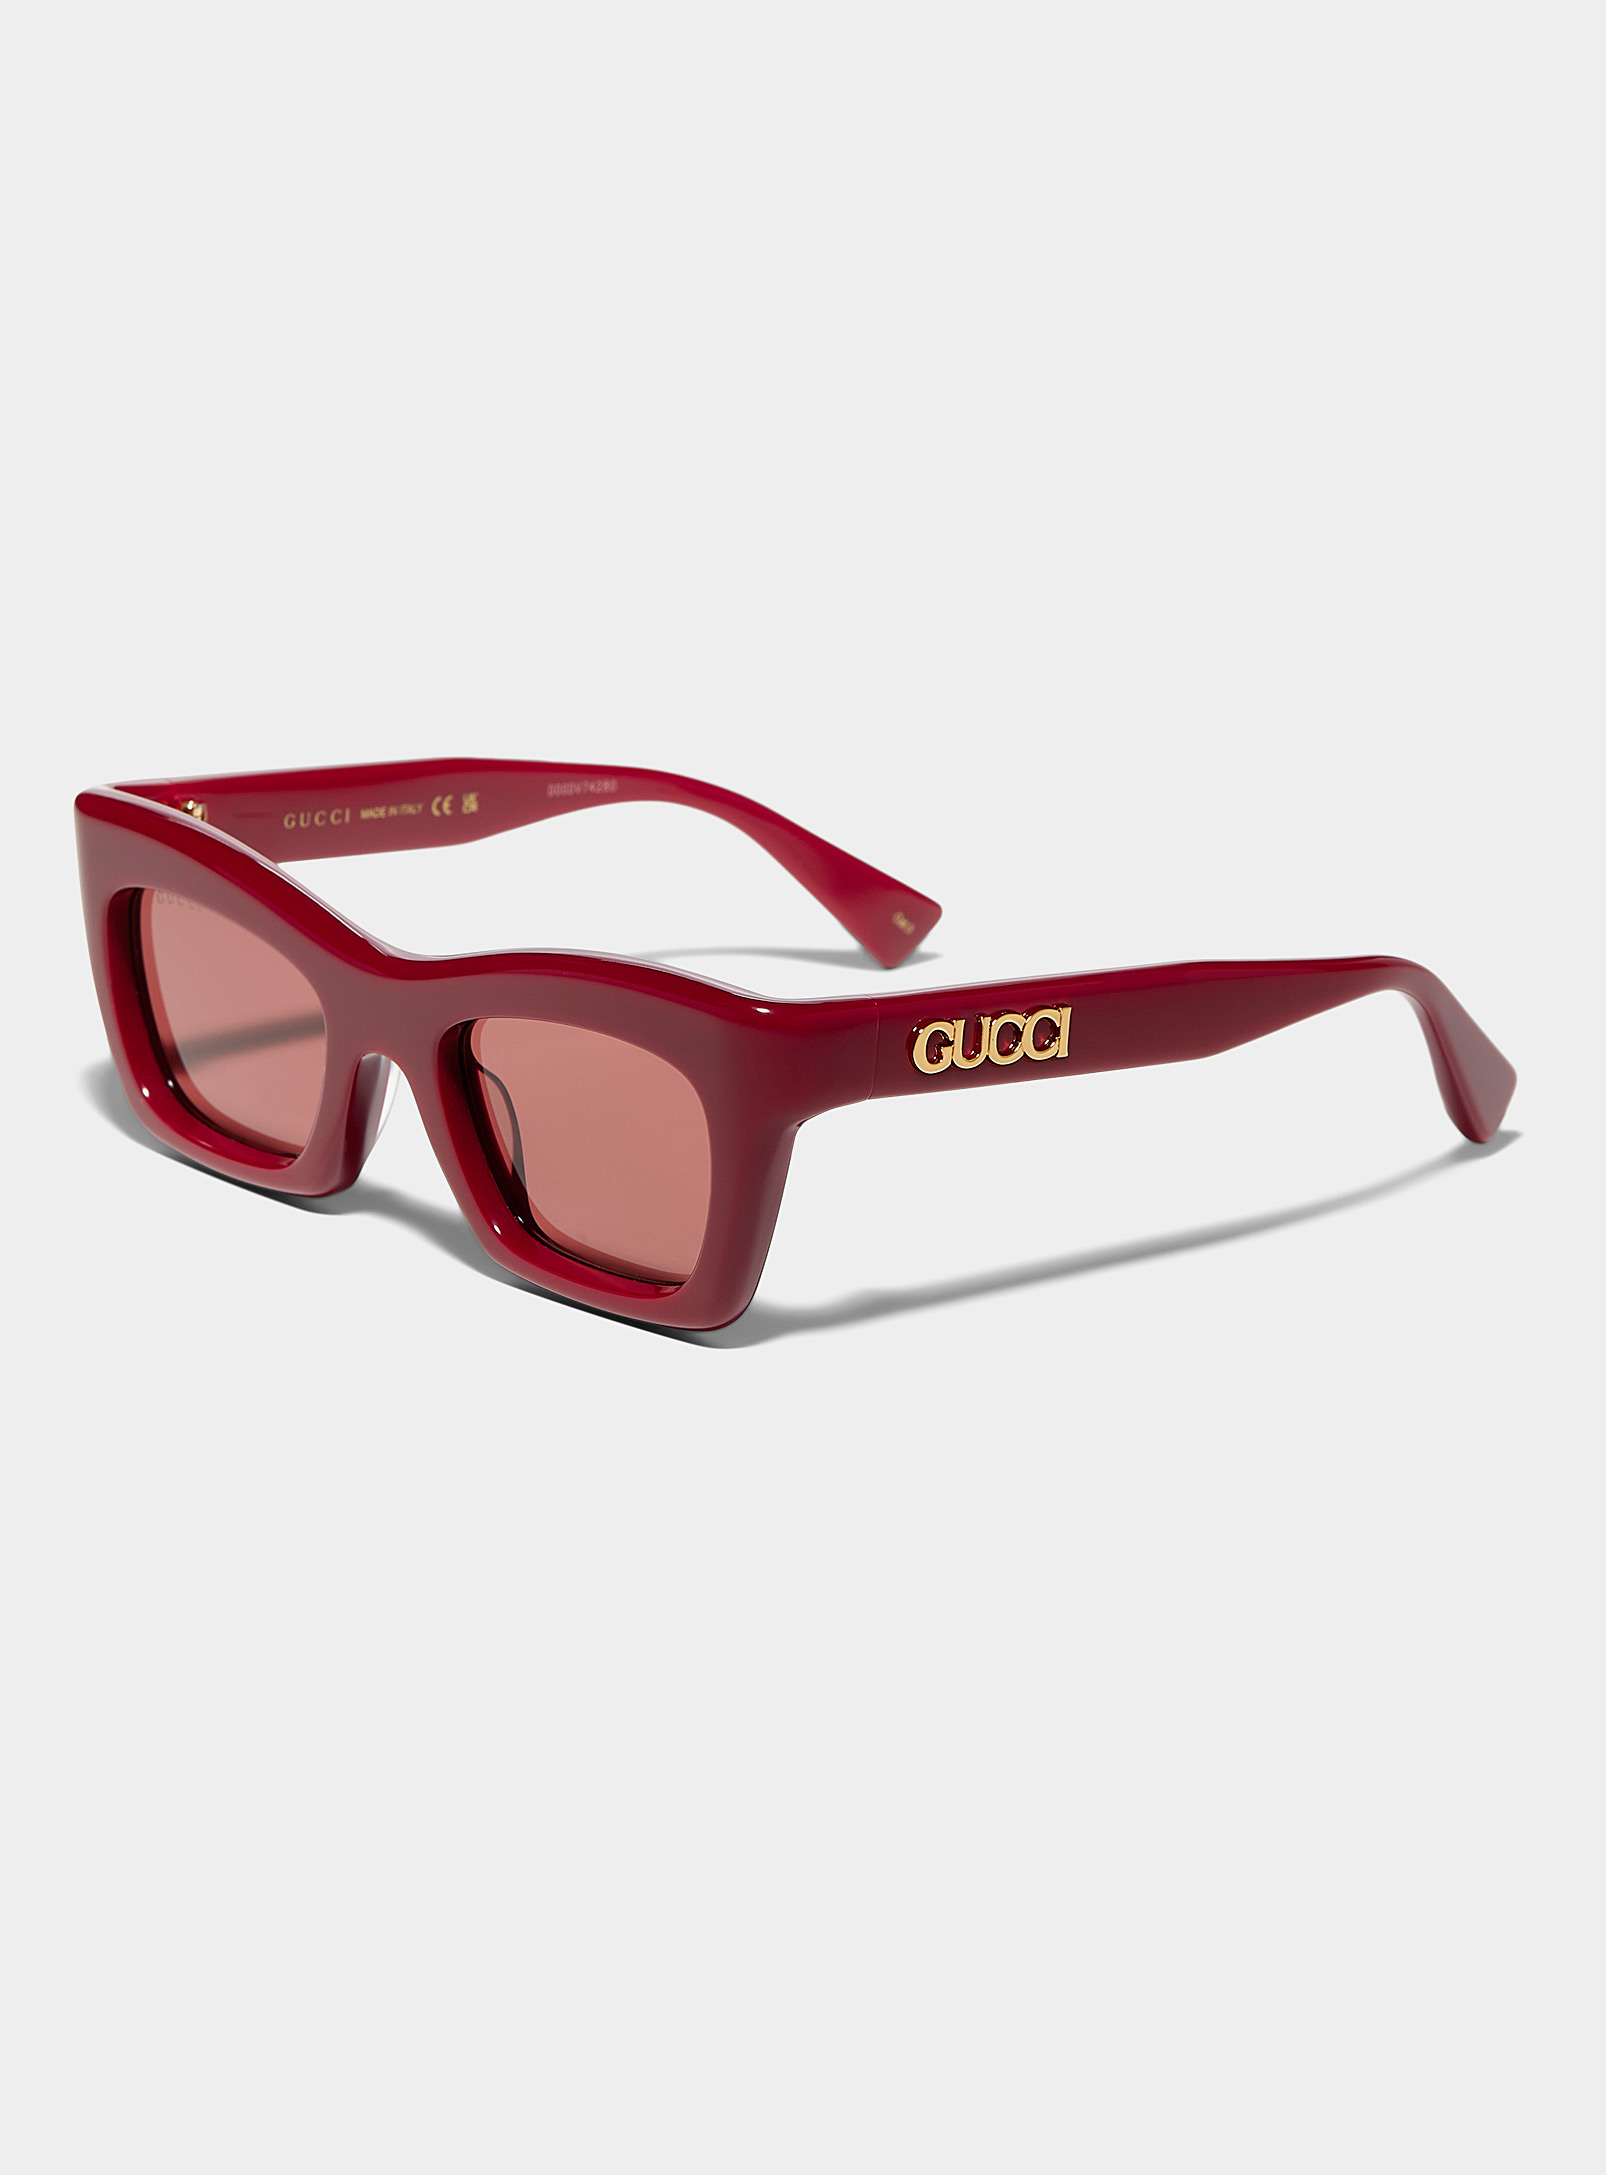 Gucci - Burgundy cat-eye sunglasses